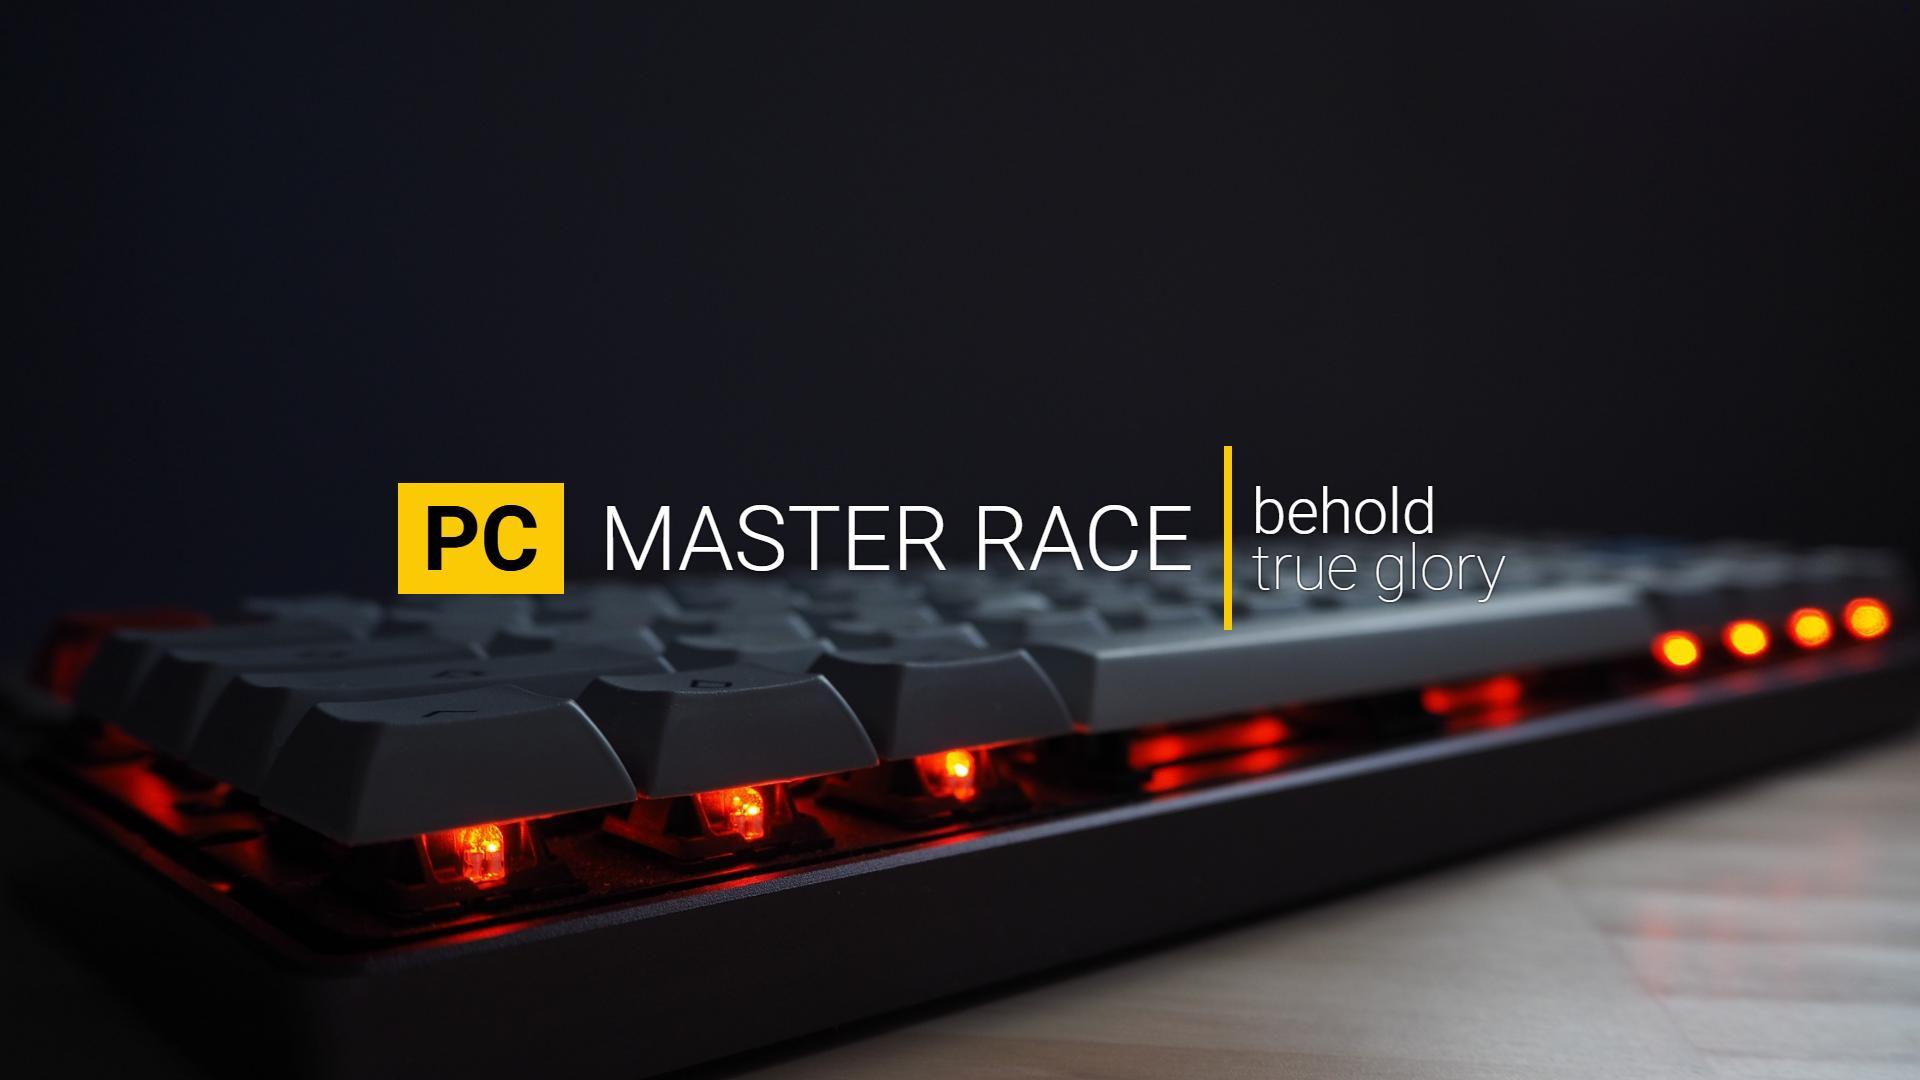 Wallpaper, PC Master Race, mechanical keyboard 1920x1080